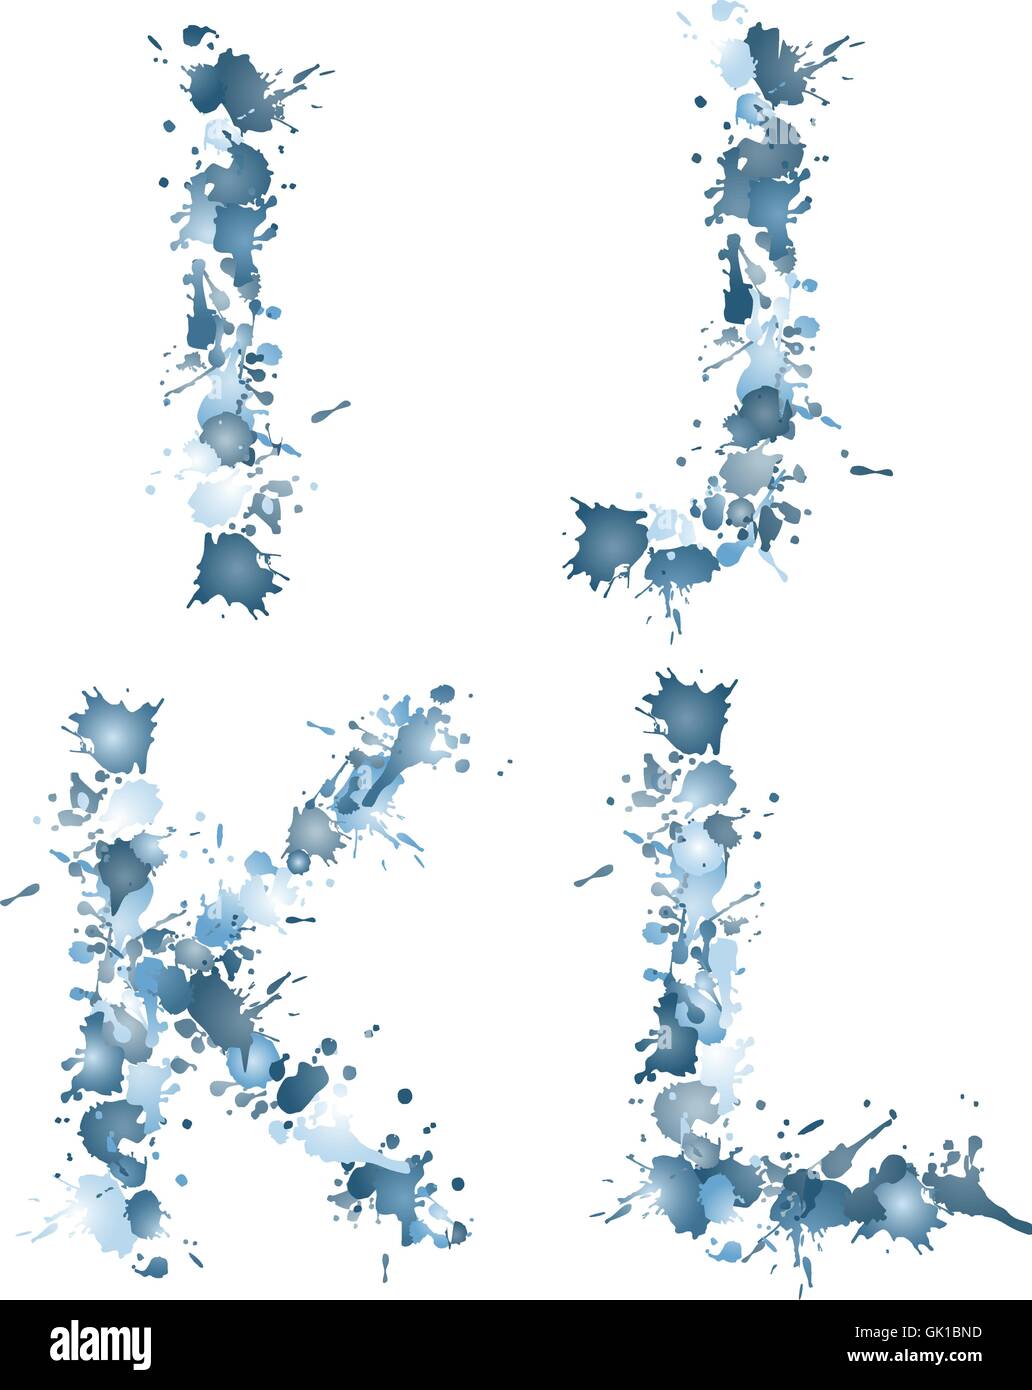 File:Metallbuchstaben.jpg - Wikimedia Commons